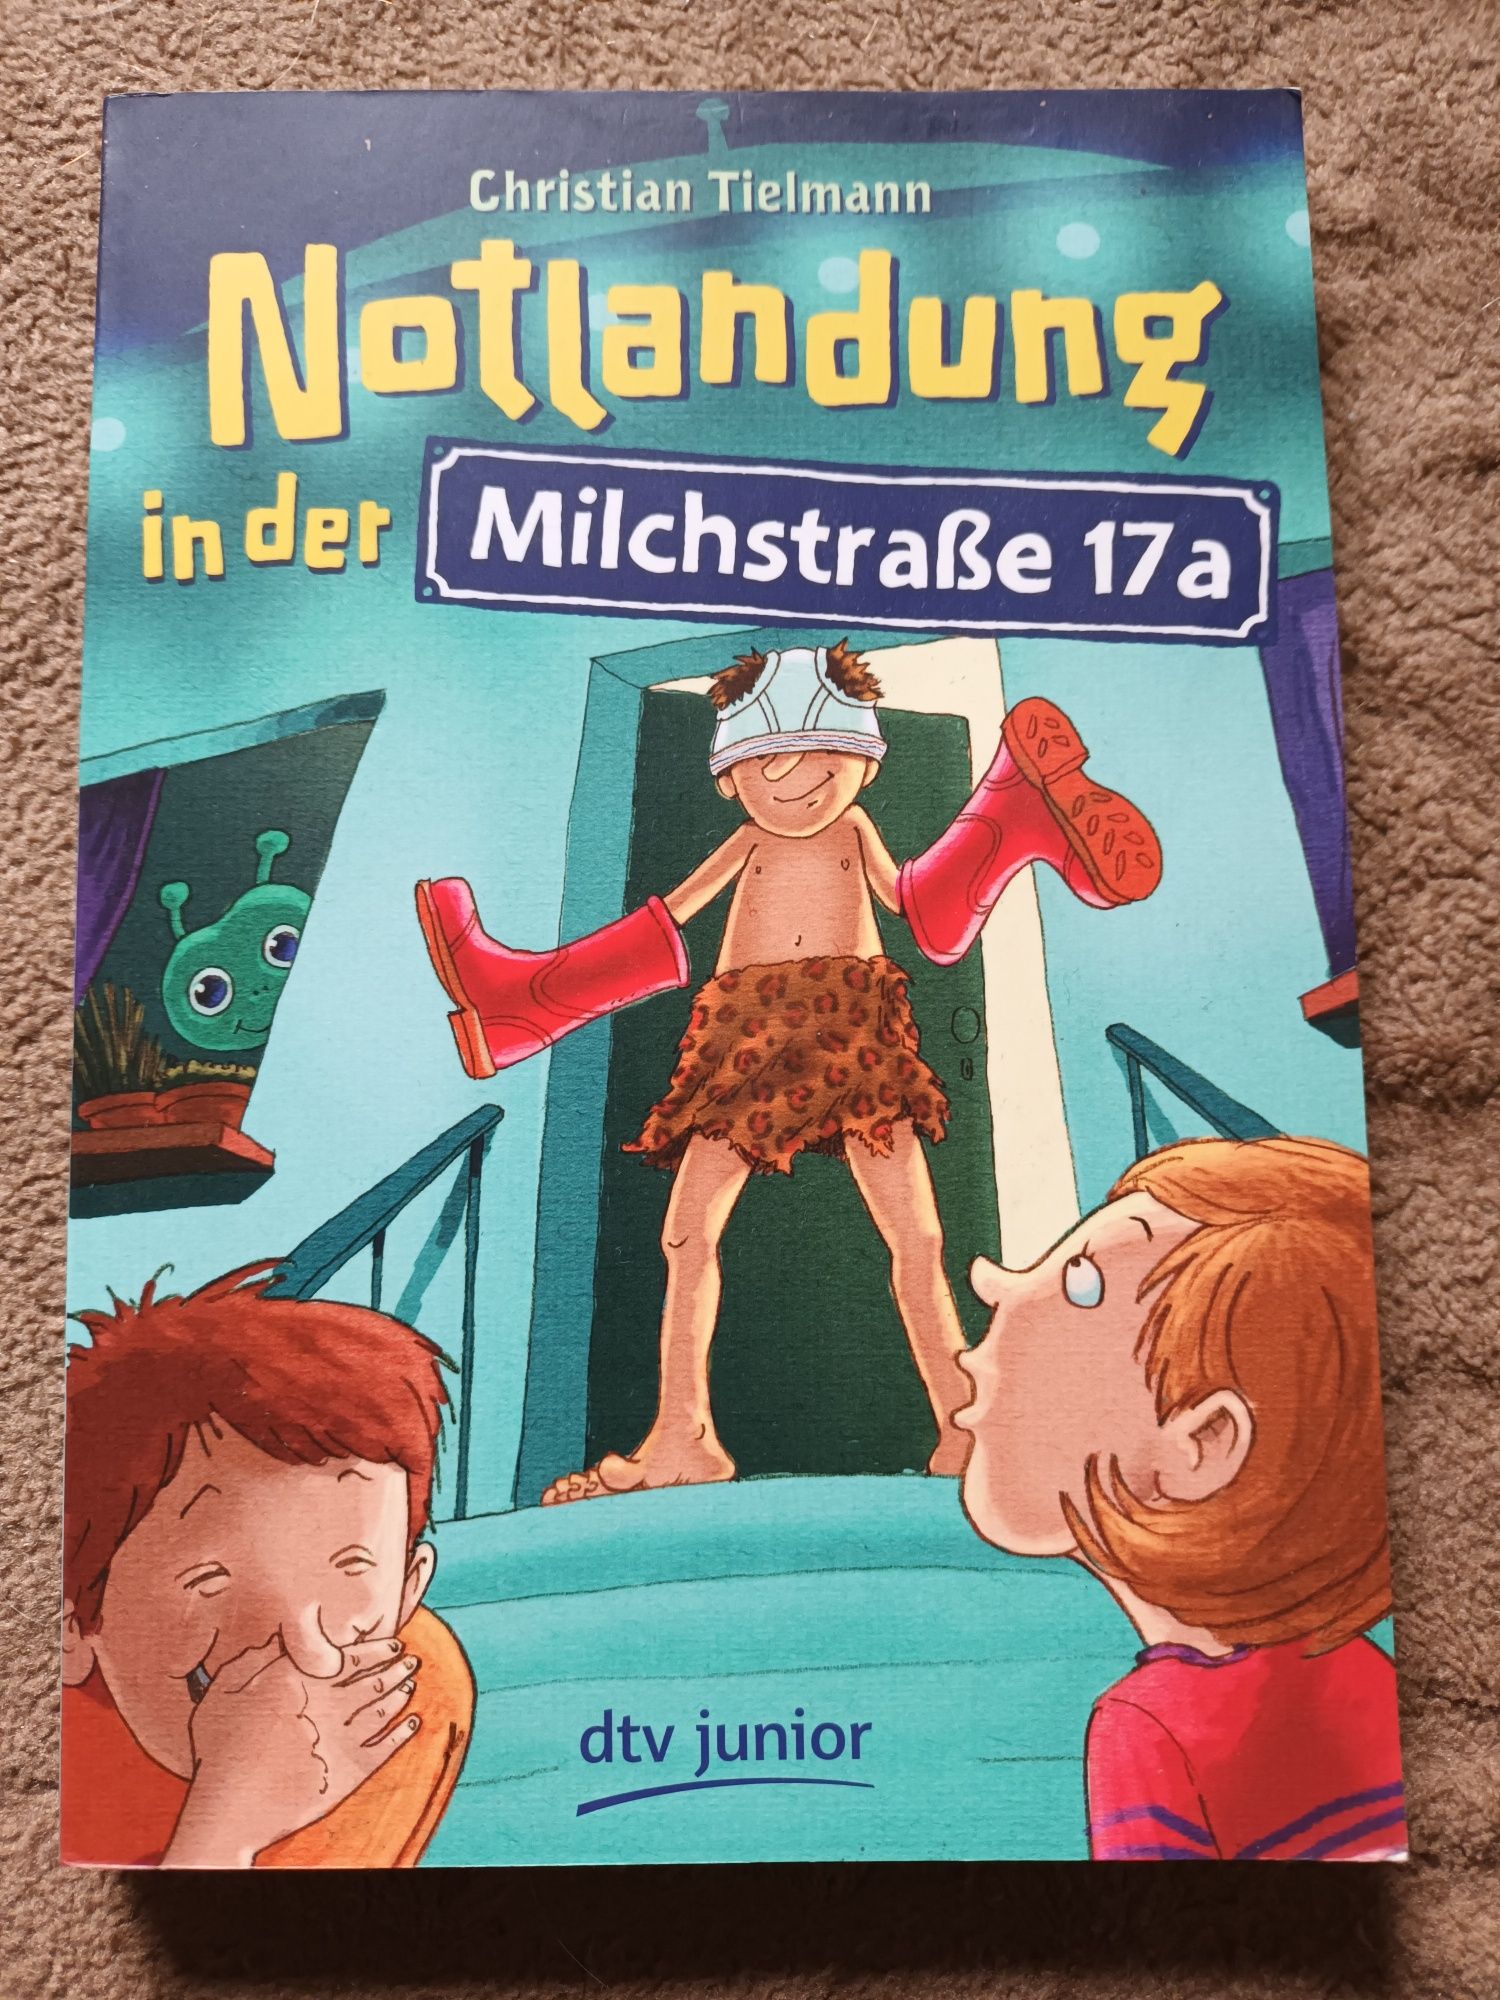 Notlandung in der Milchstra&e 17 a  książka w j.niemieckim